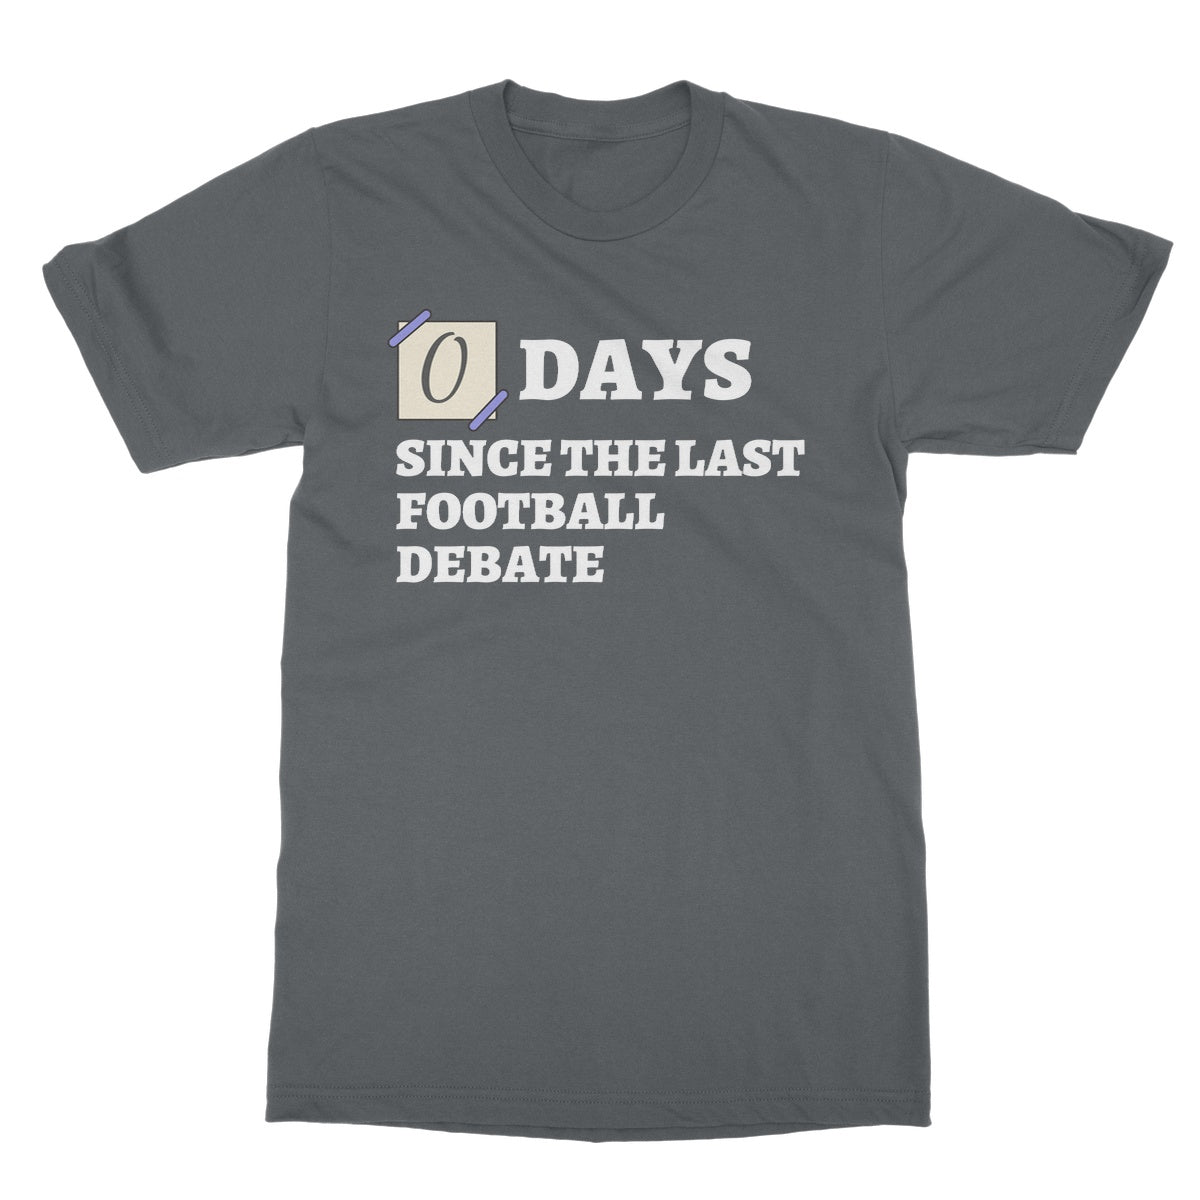 0 days since the last football debate t shirt grey